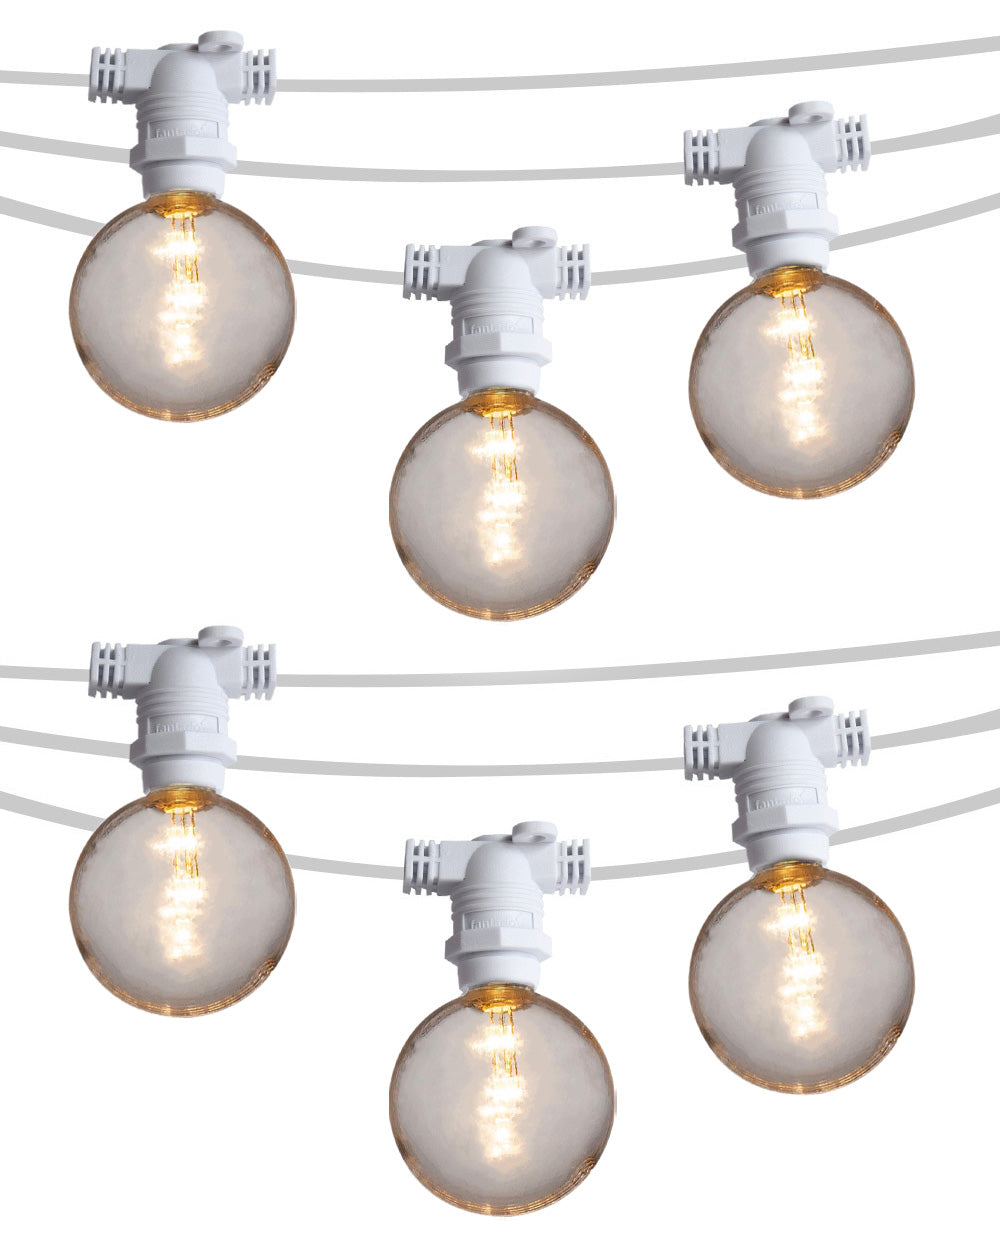 50 Socket Outdoor Commercial String Light Set, Shatterproof LED Bulbs, 54 FT White Cord w/ E12 C7 Base, Weatherproof